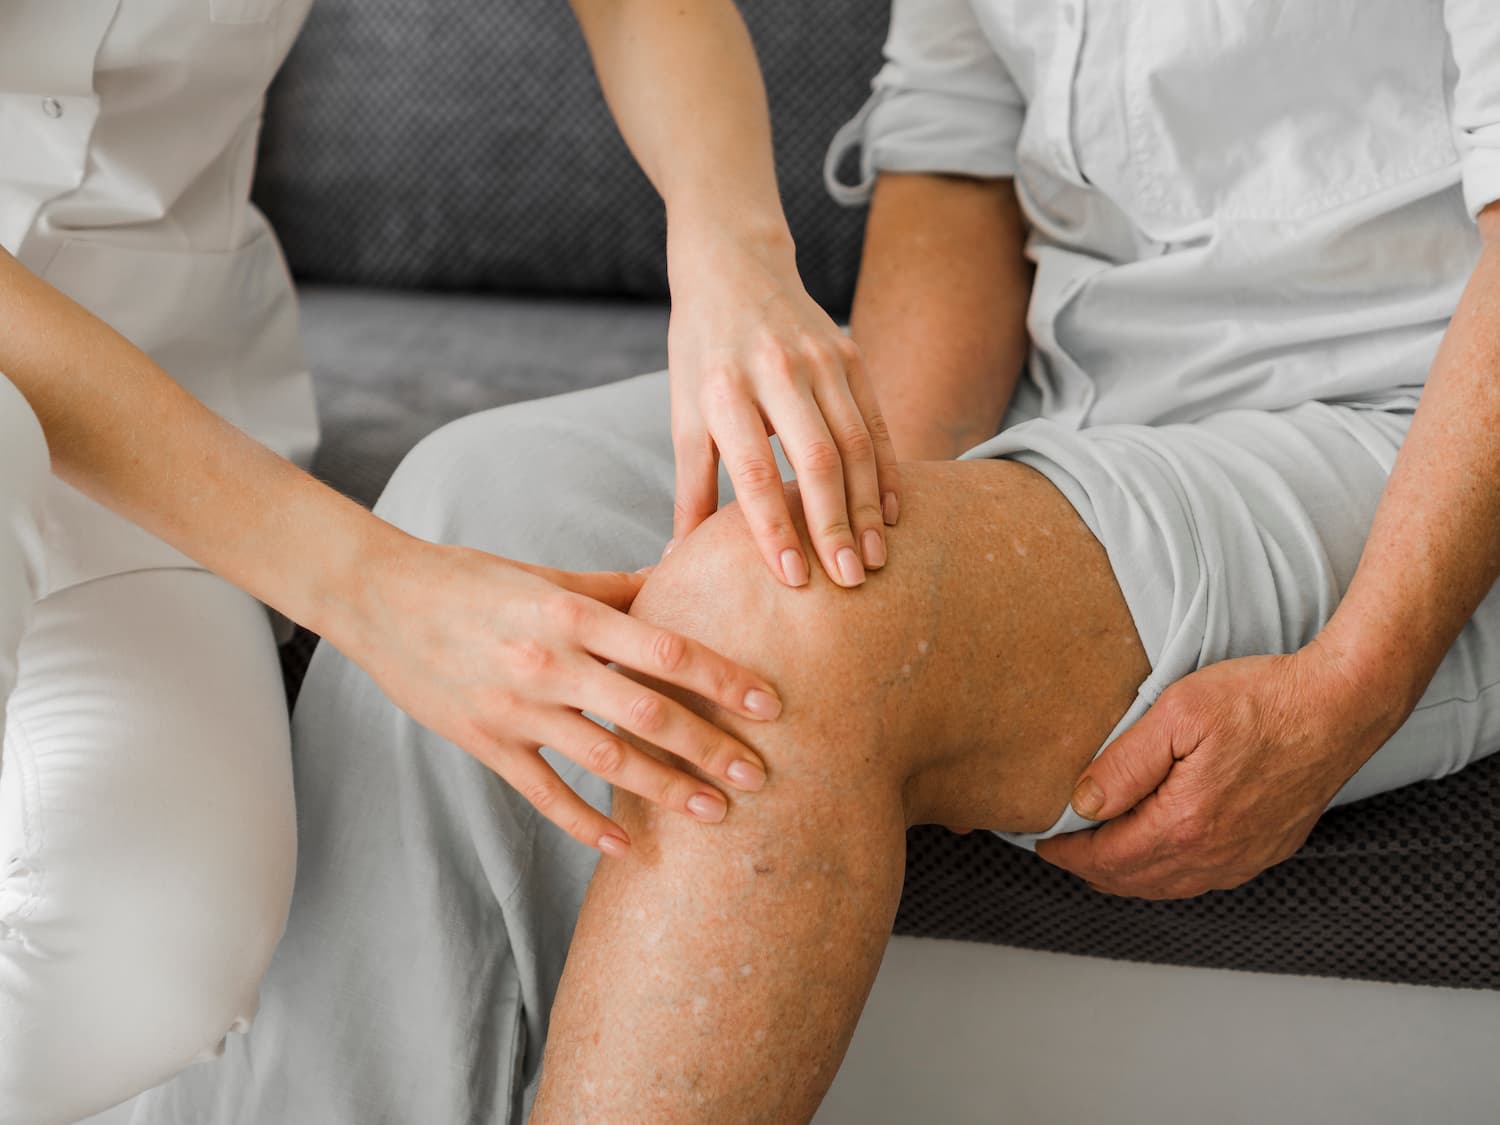 Domowe sposoby na ból kolana: skuteczne i naturalne metody